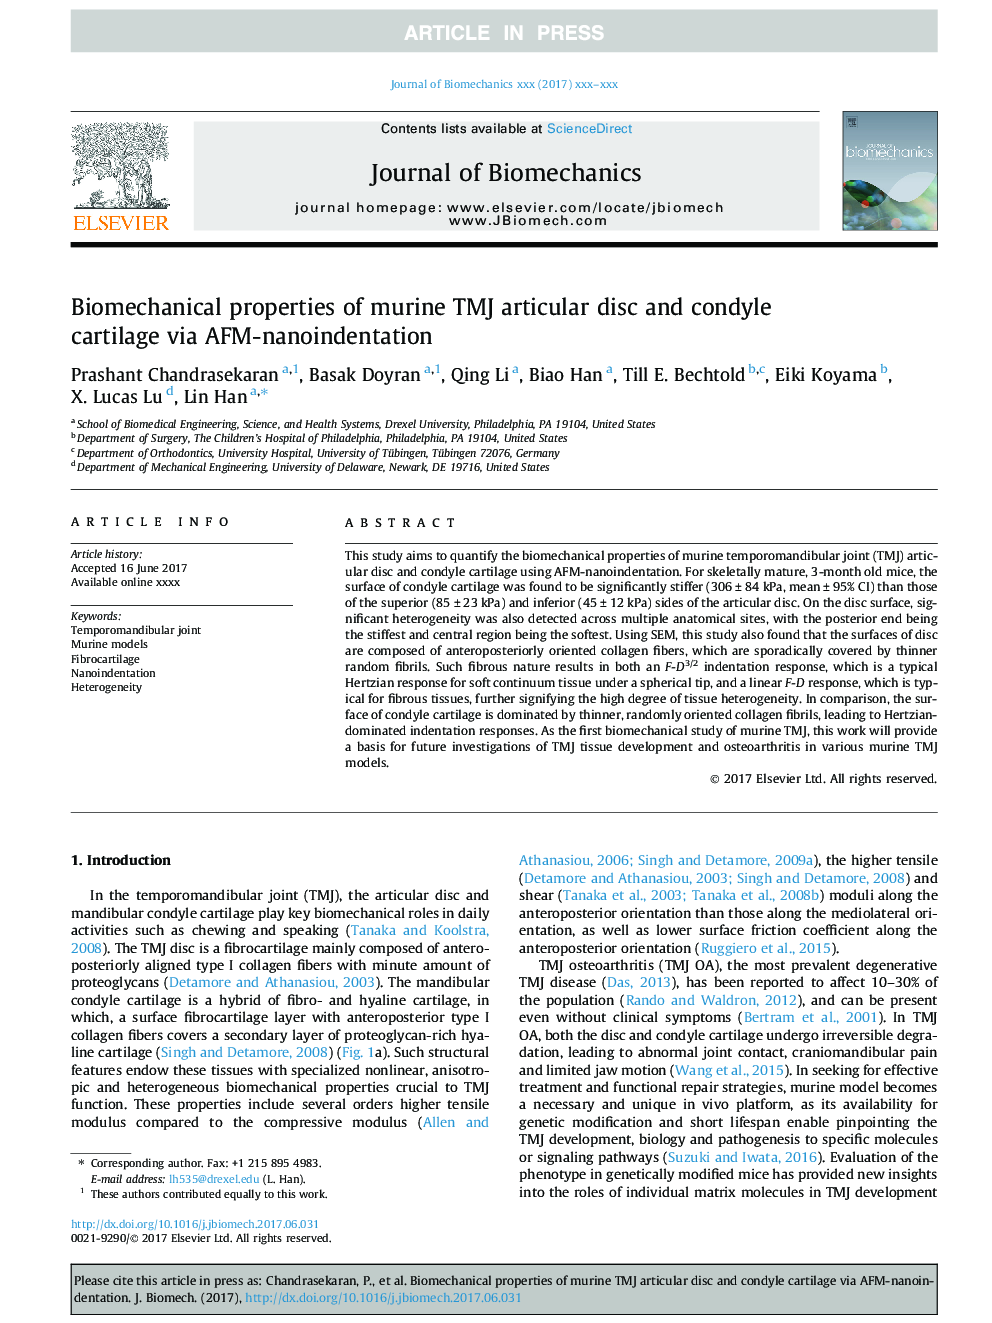 Biomechanical properties of murine TMJ articular disc and condyle cartilage via AFM-nanoindentation